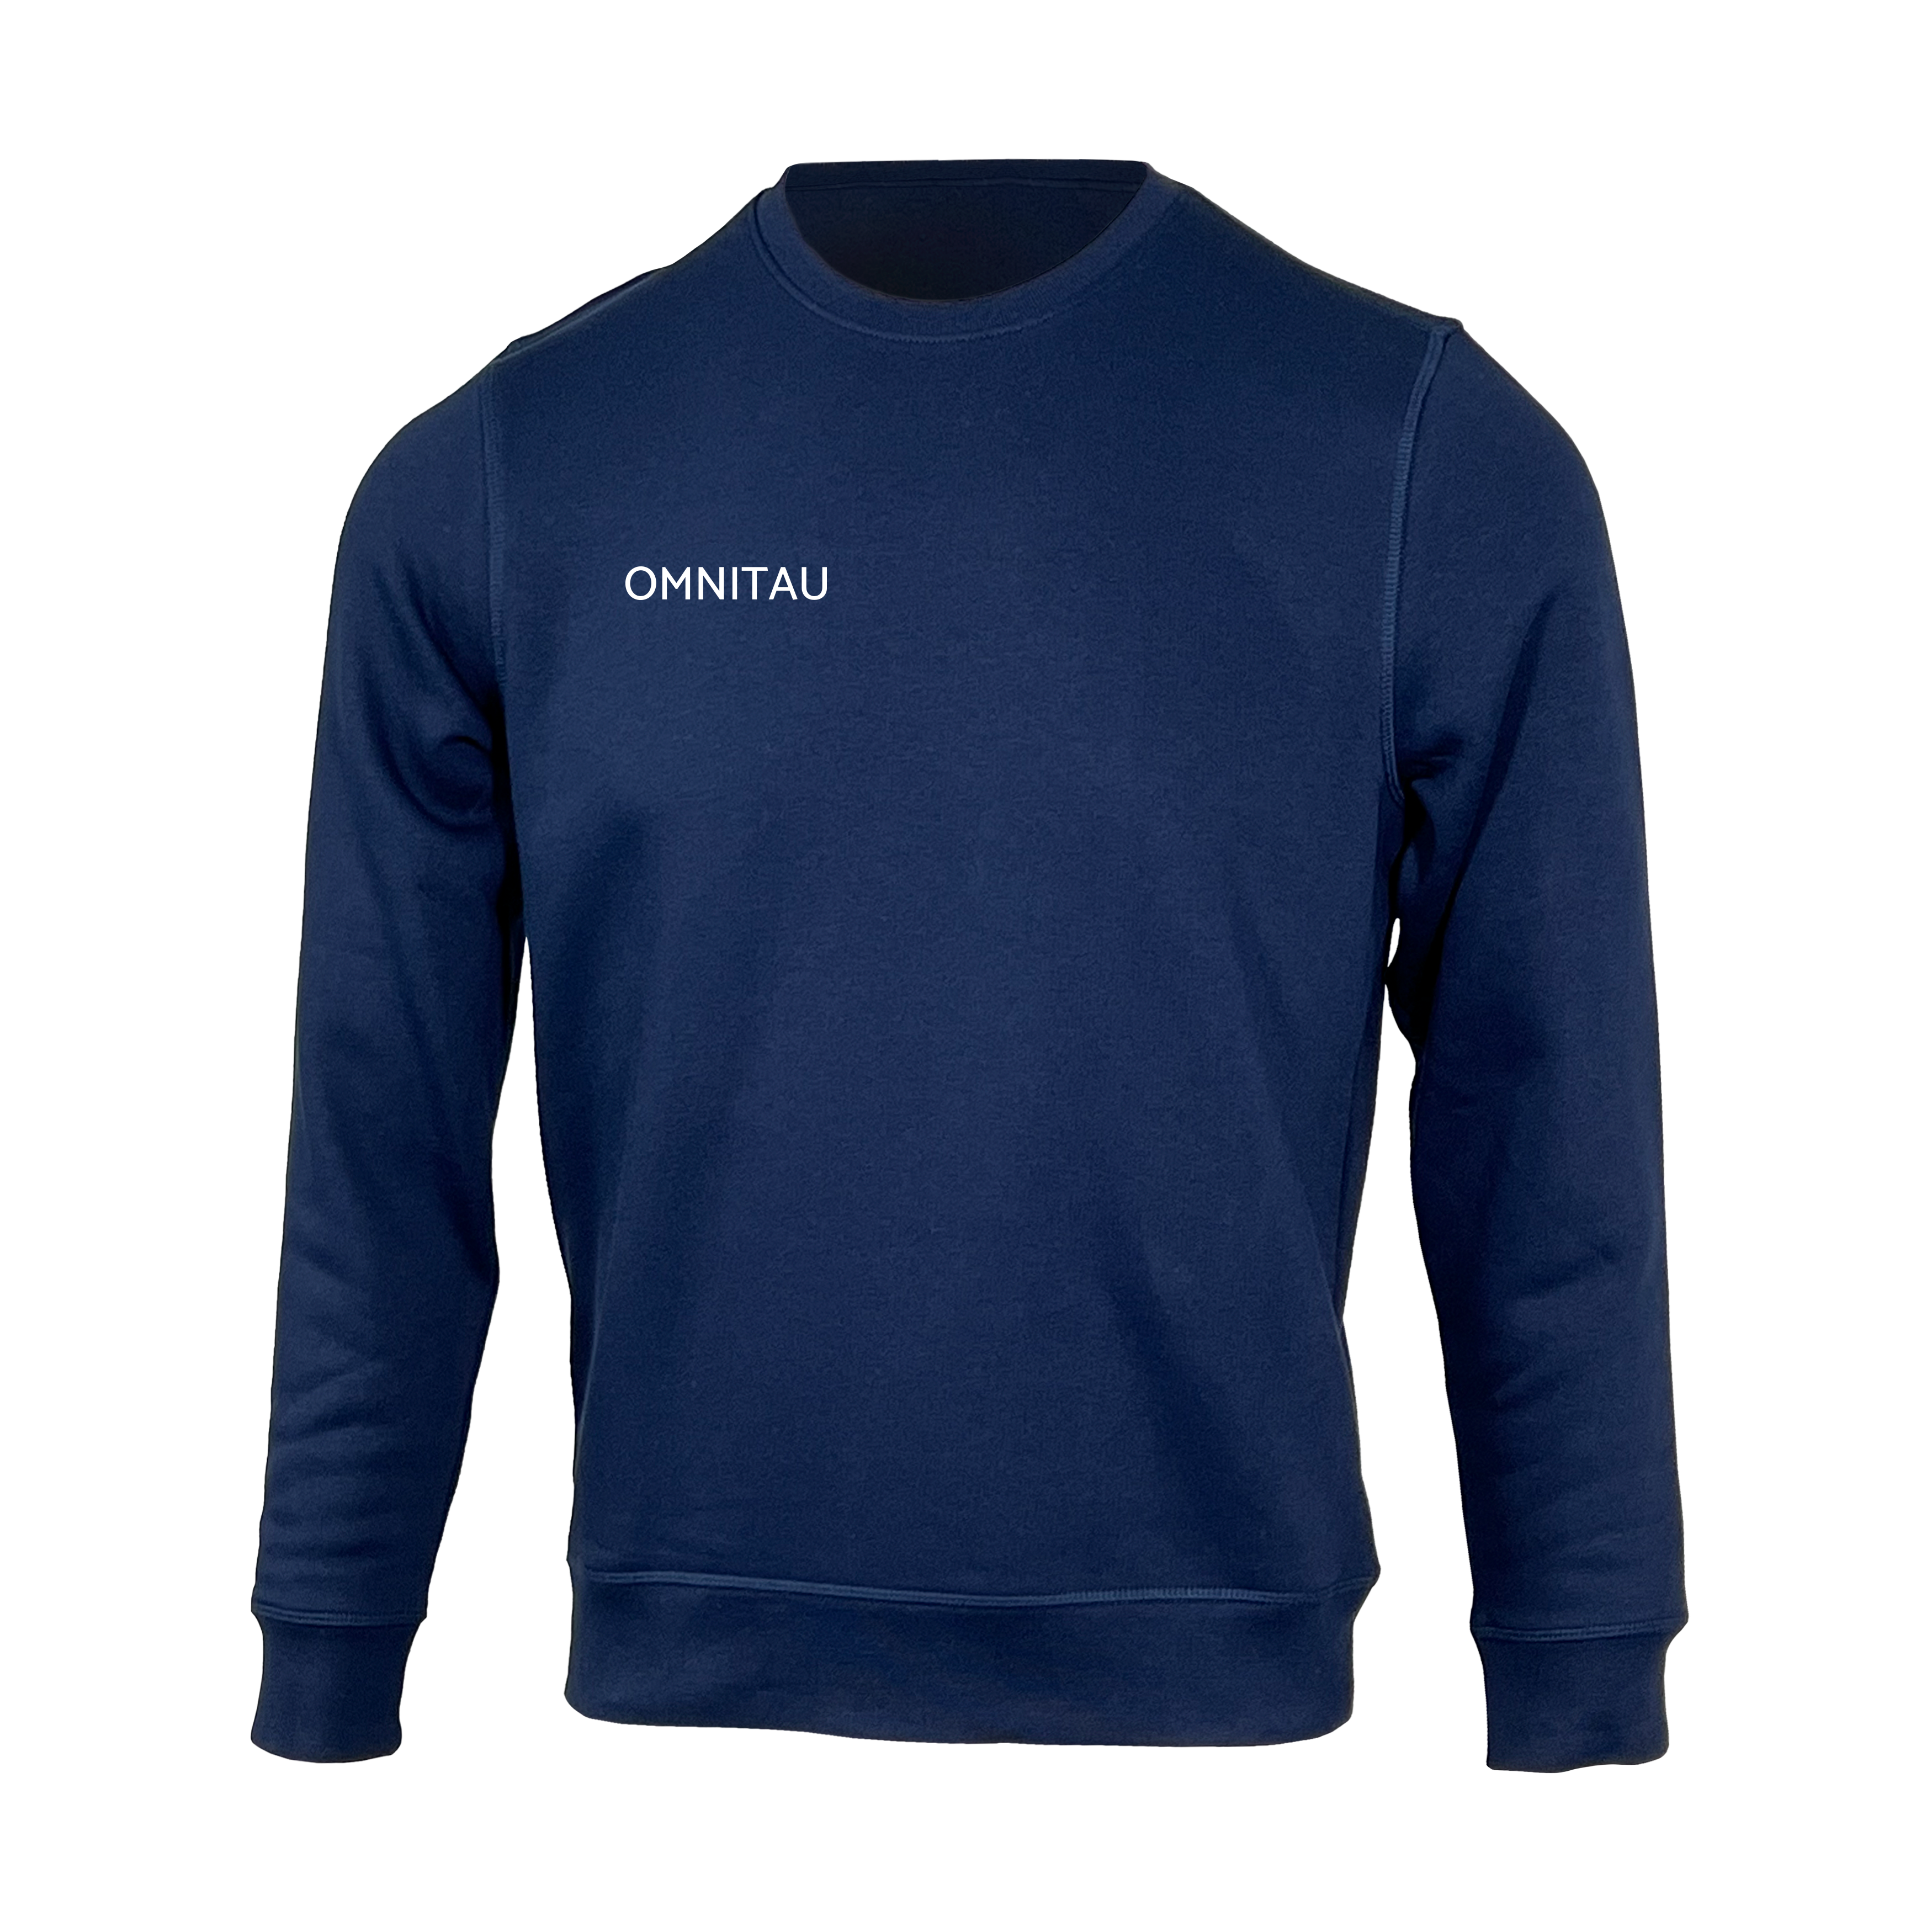 Omnitau Kid's Team Sports Organic Cotton Sweatshirt - French Navy